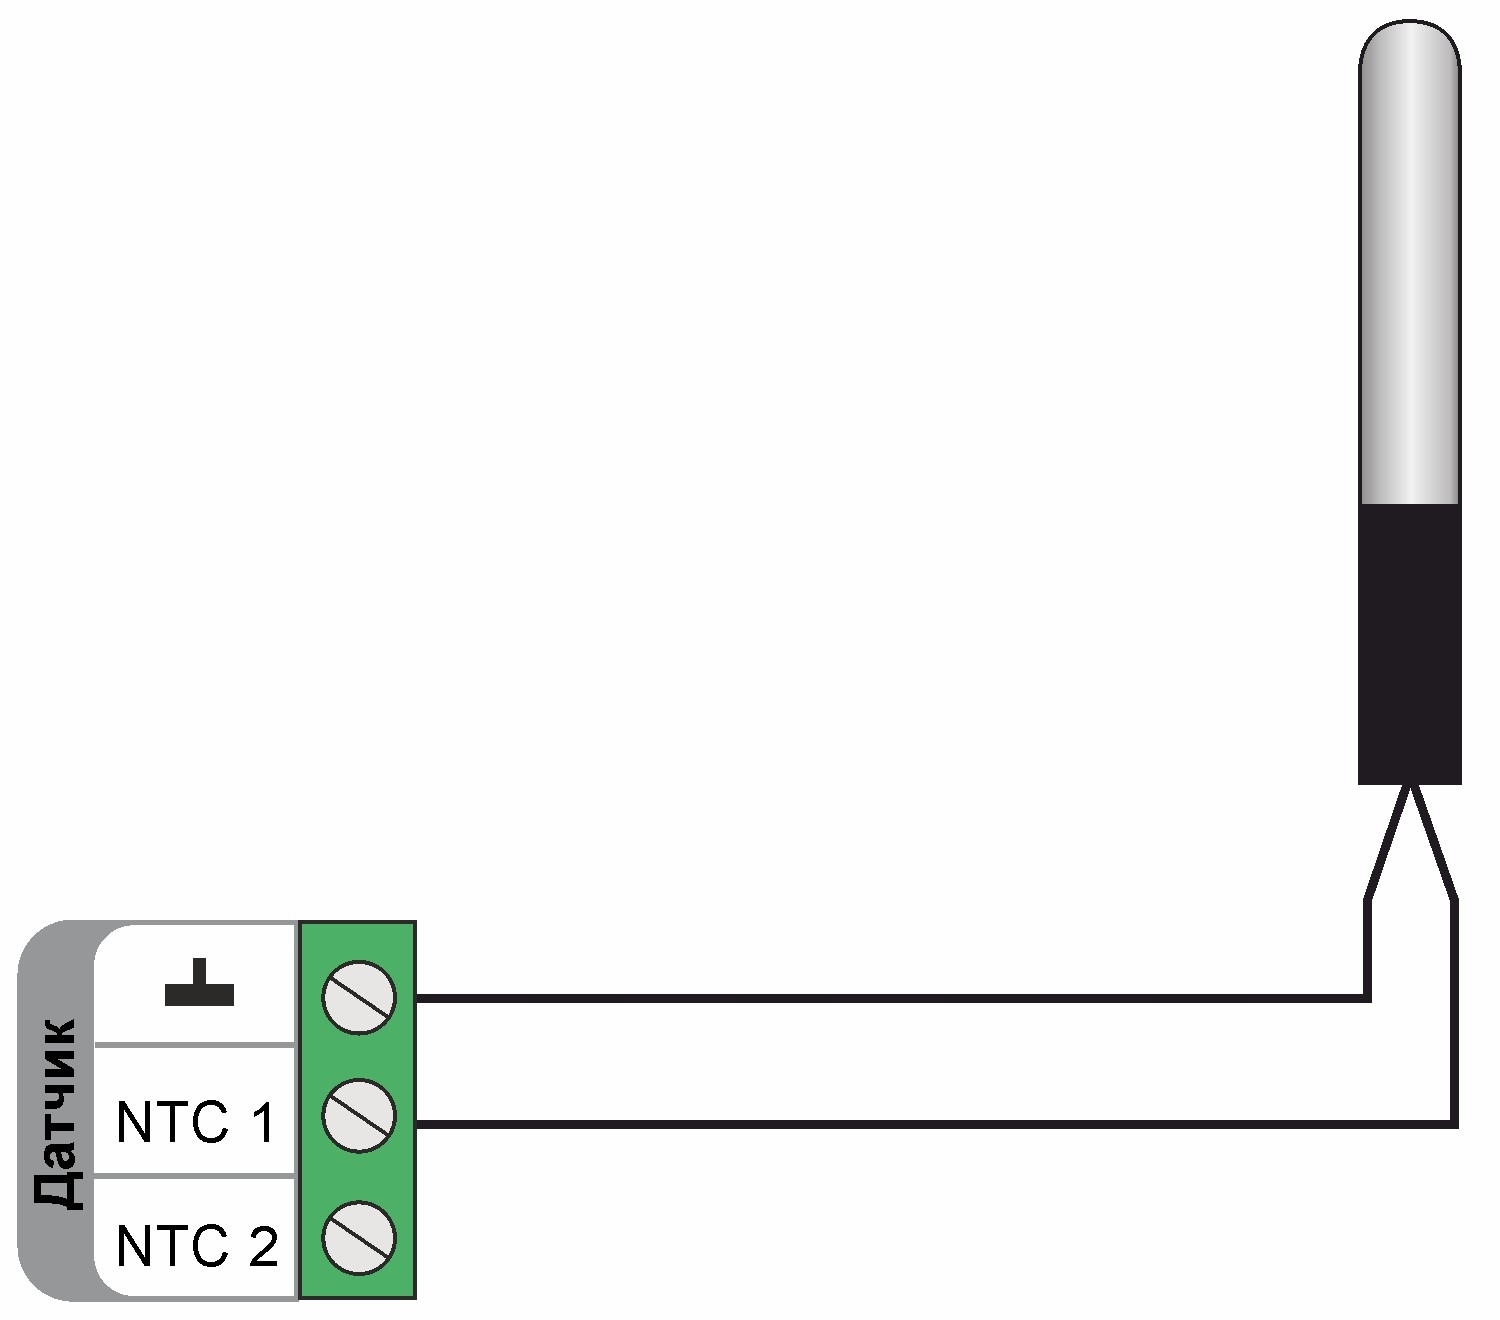 Zont ntc. NTC подключение. Подключение NTC датчика. NTC B 3950 схема термореле. Терморегулятор NTC 400 схема подключения.